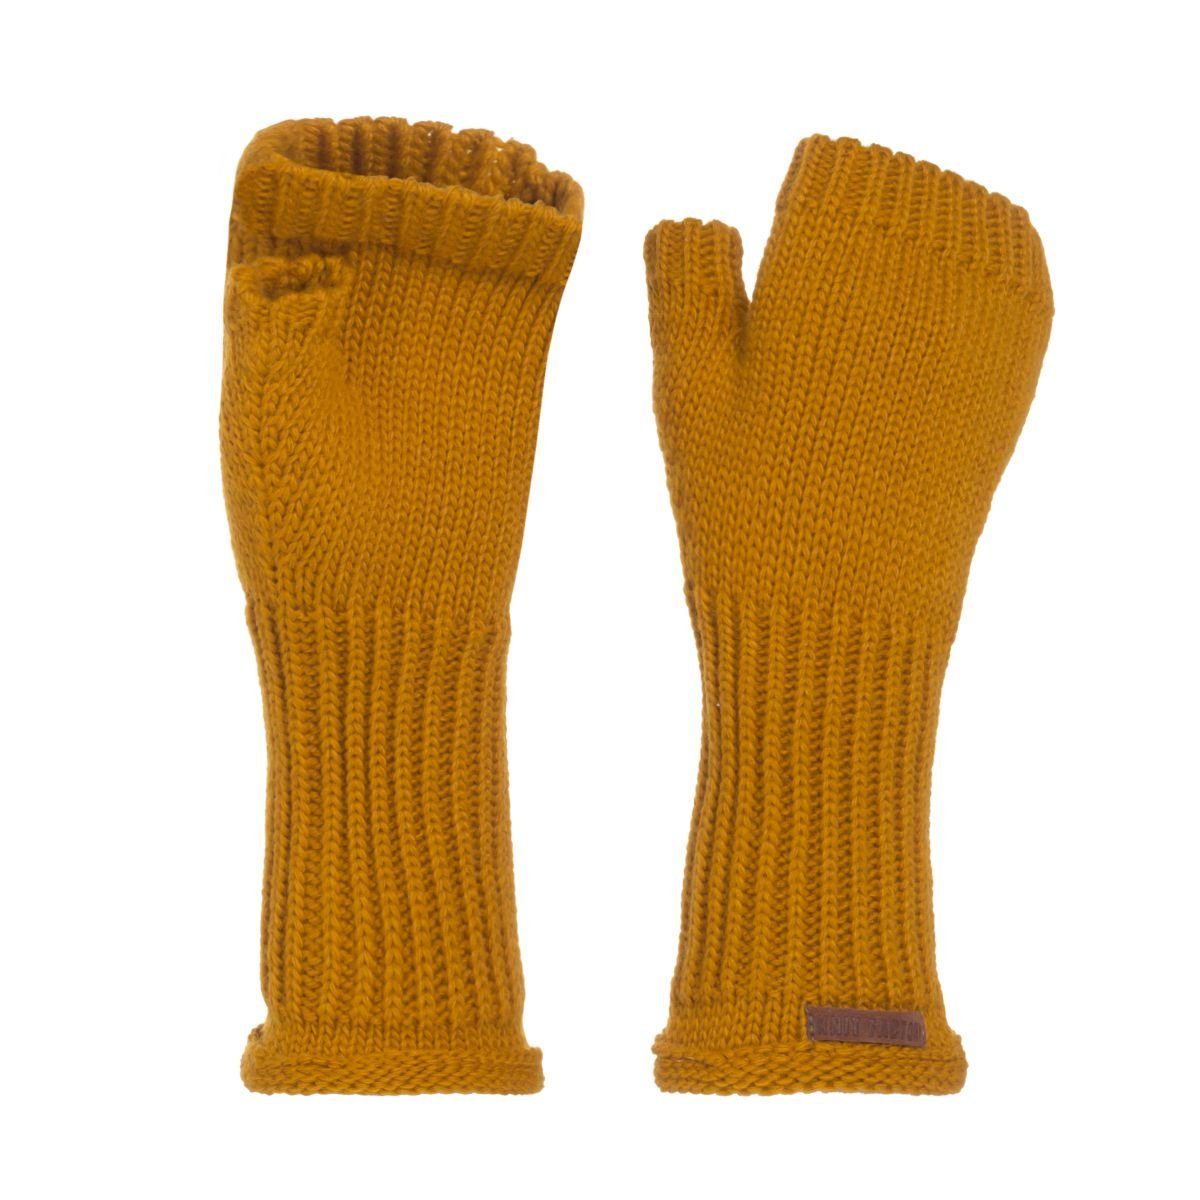 Knit Factory Strickhandschuhe Cleo Handschuhe One Size Glatt Gelb Handschuhe Handstulpen Handschuhe ihne Finger Ocker